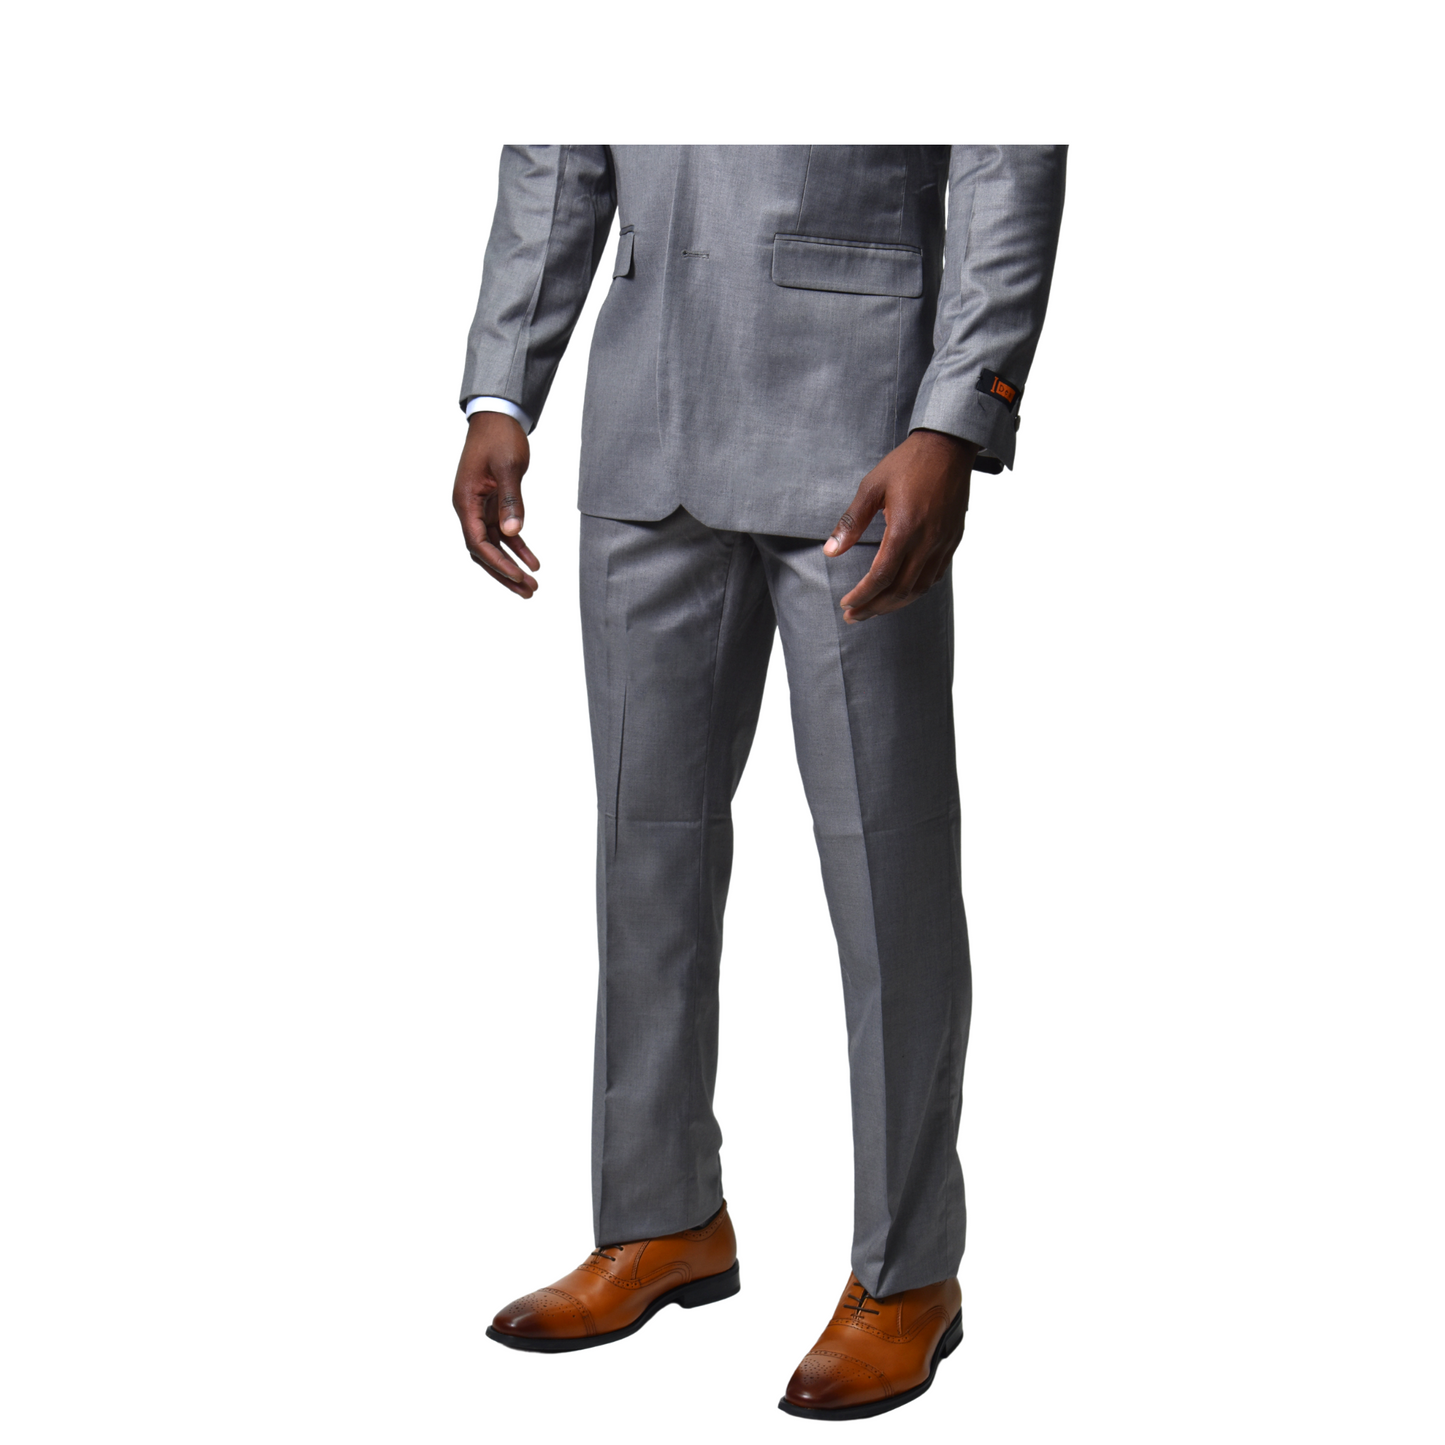 Ideal 3 Piece Suit - Medium Grey